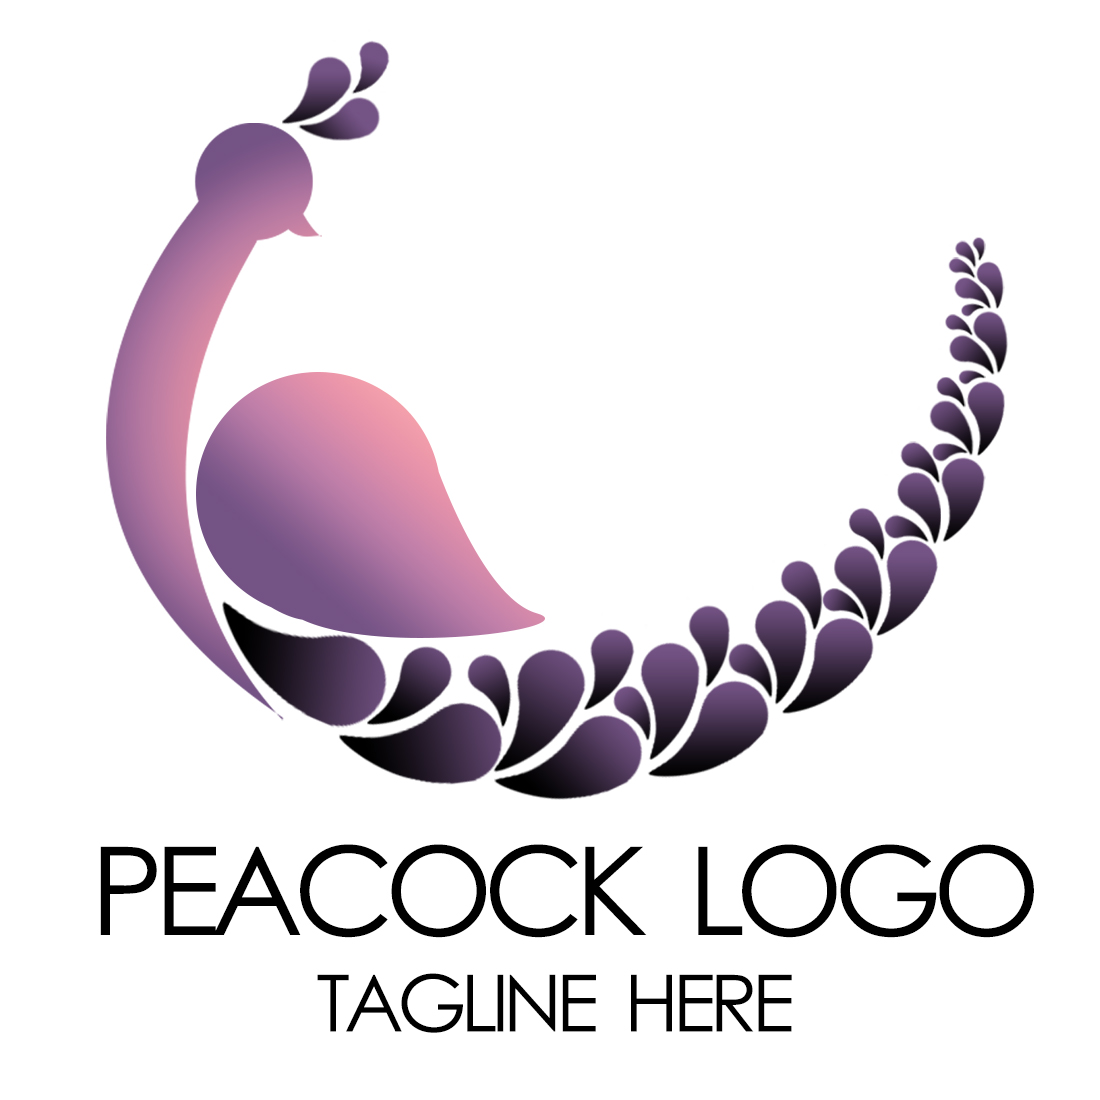 Purple Peacock-Logo Template cover image.